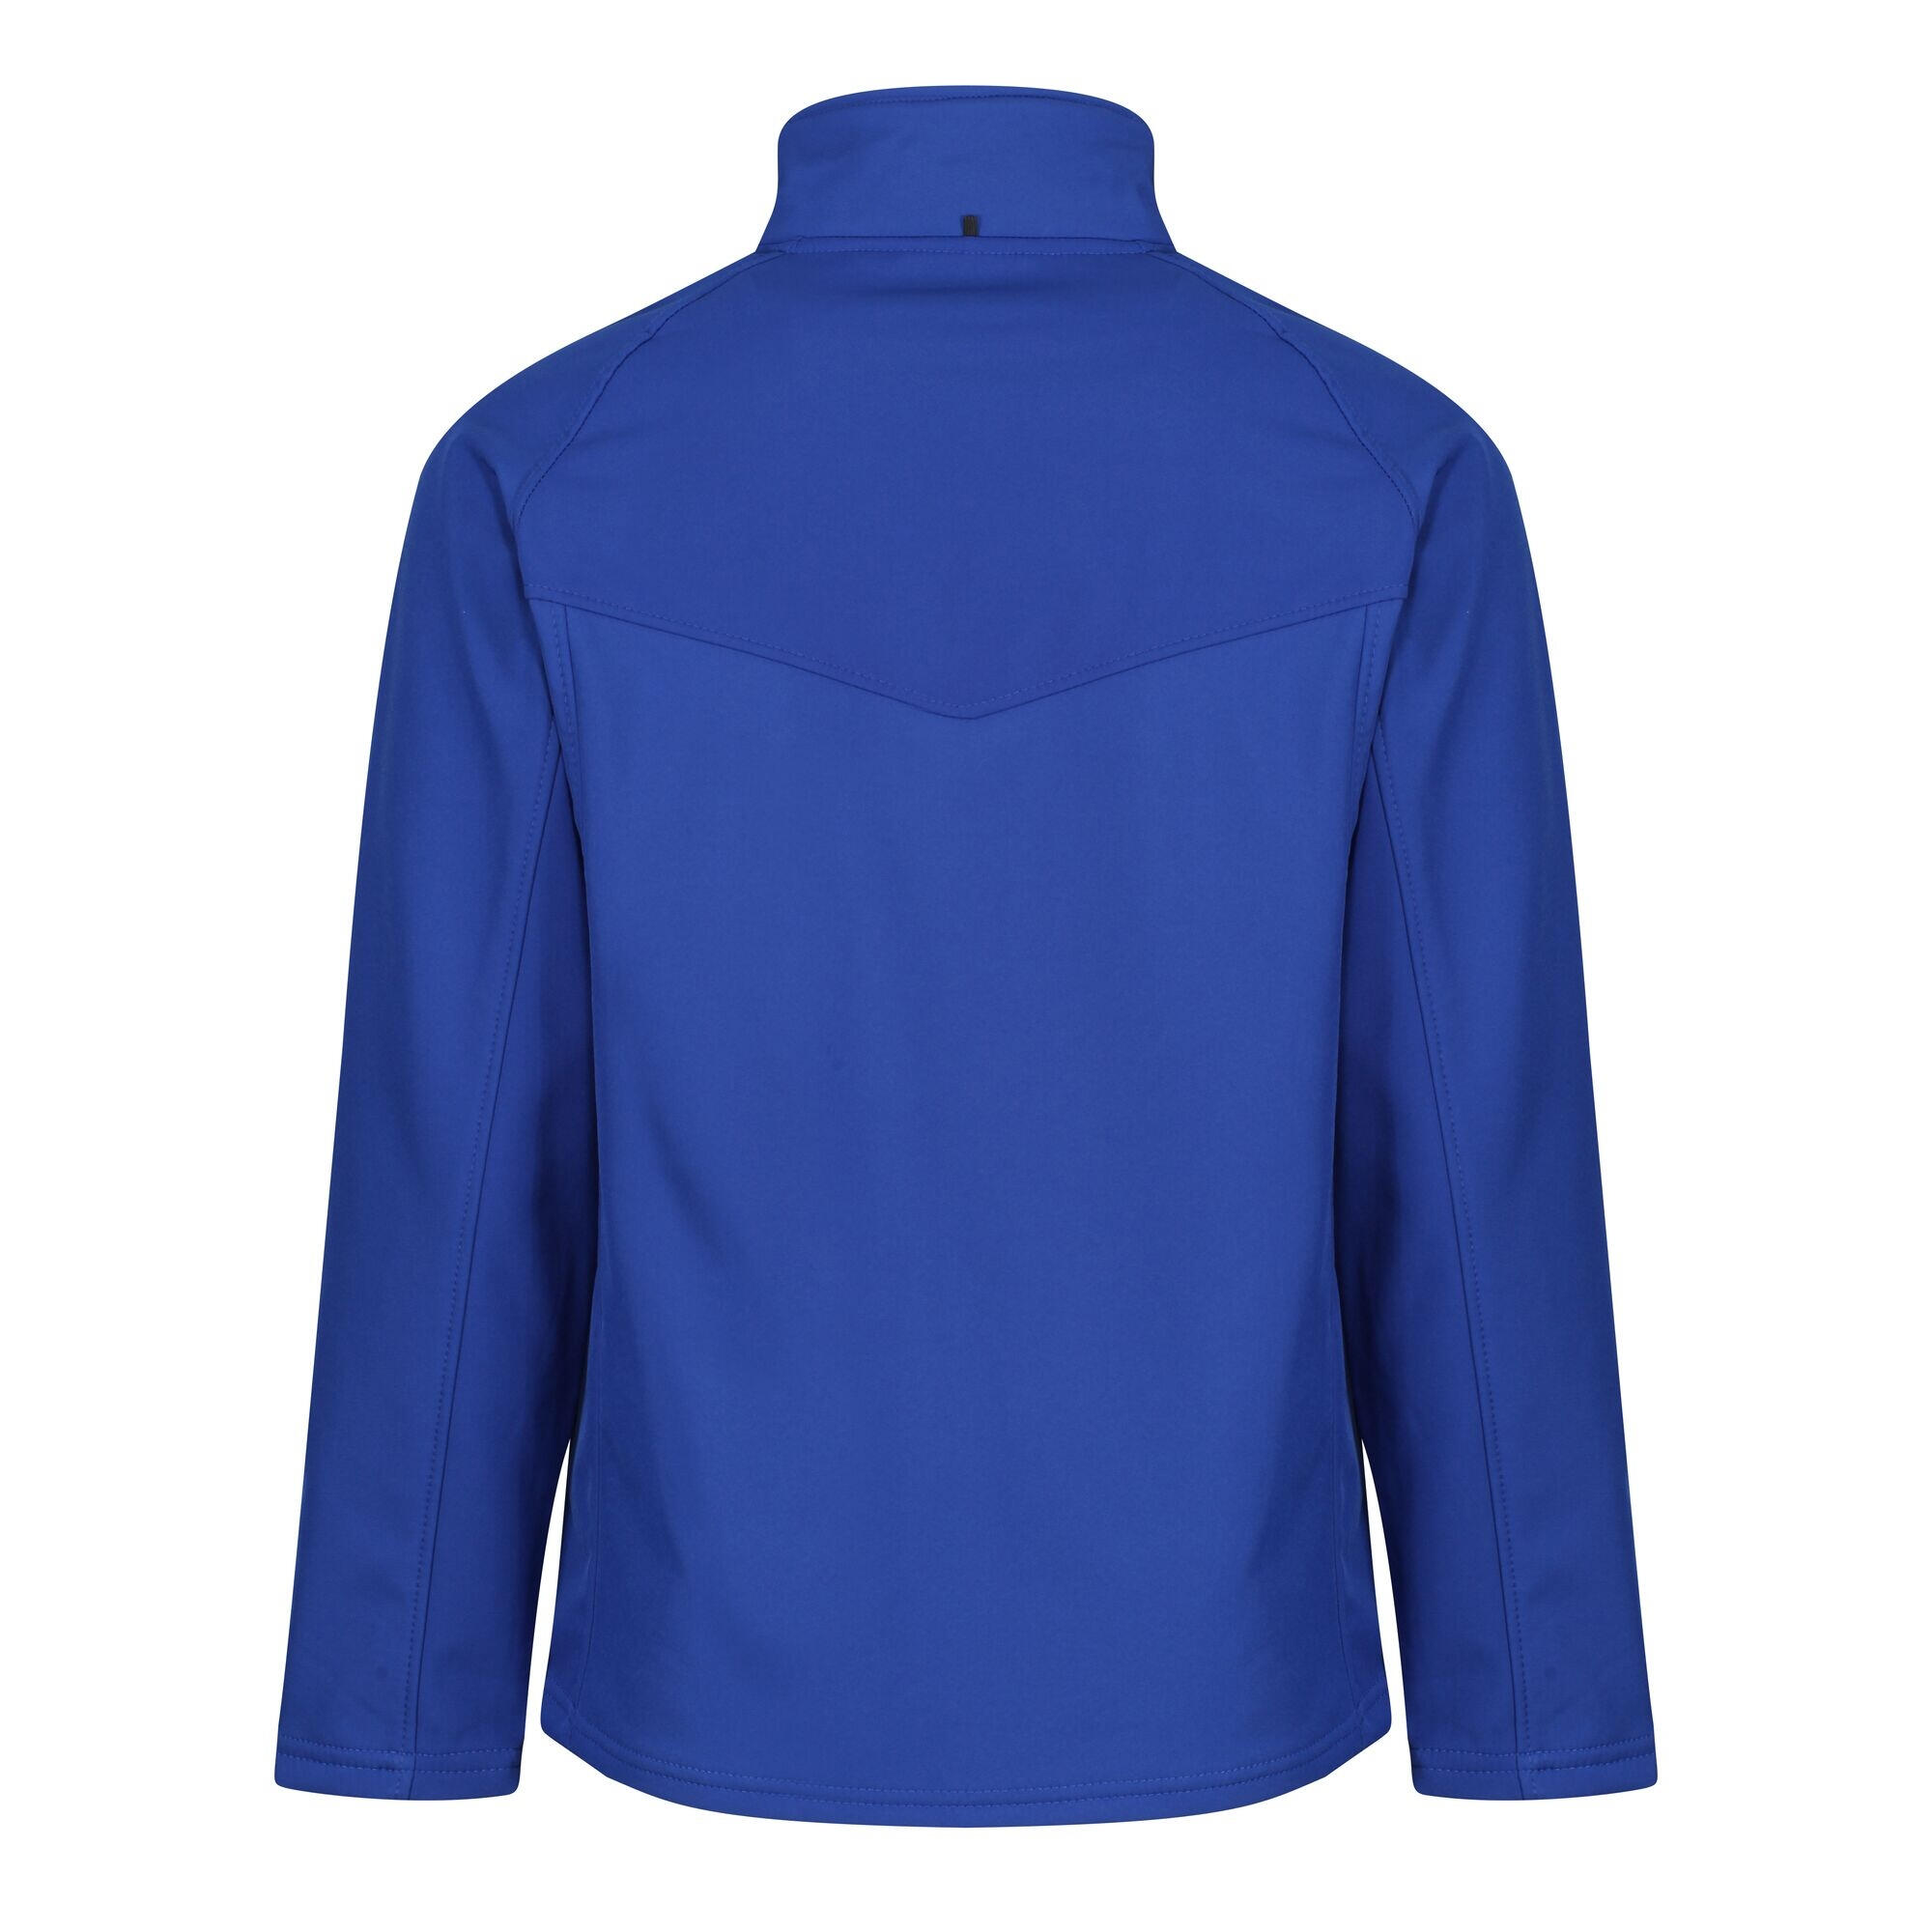 Mens Uproar Lightweight Wind Resistant Softshell Jacket (Royal Blue/Seal Grey) 2/4